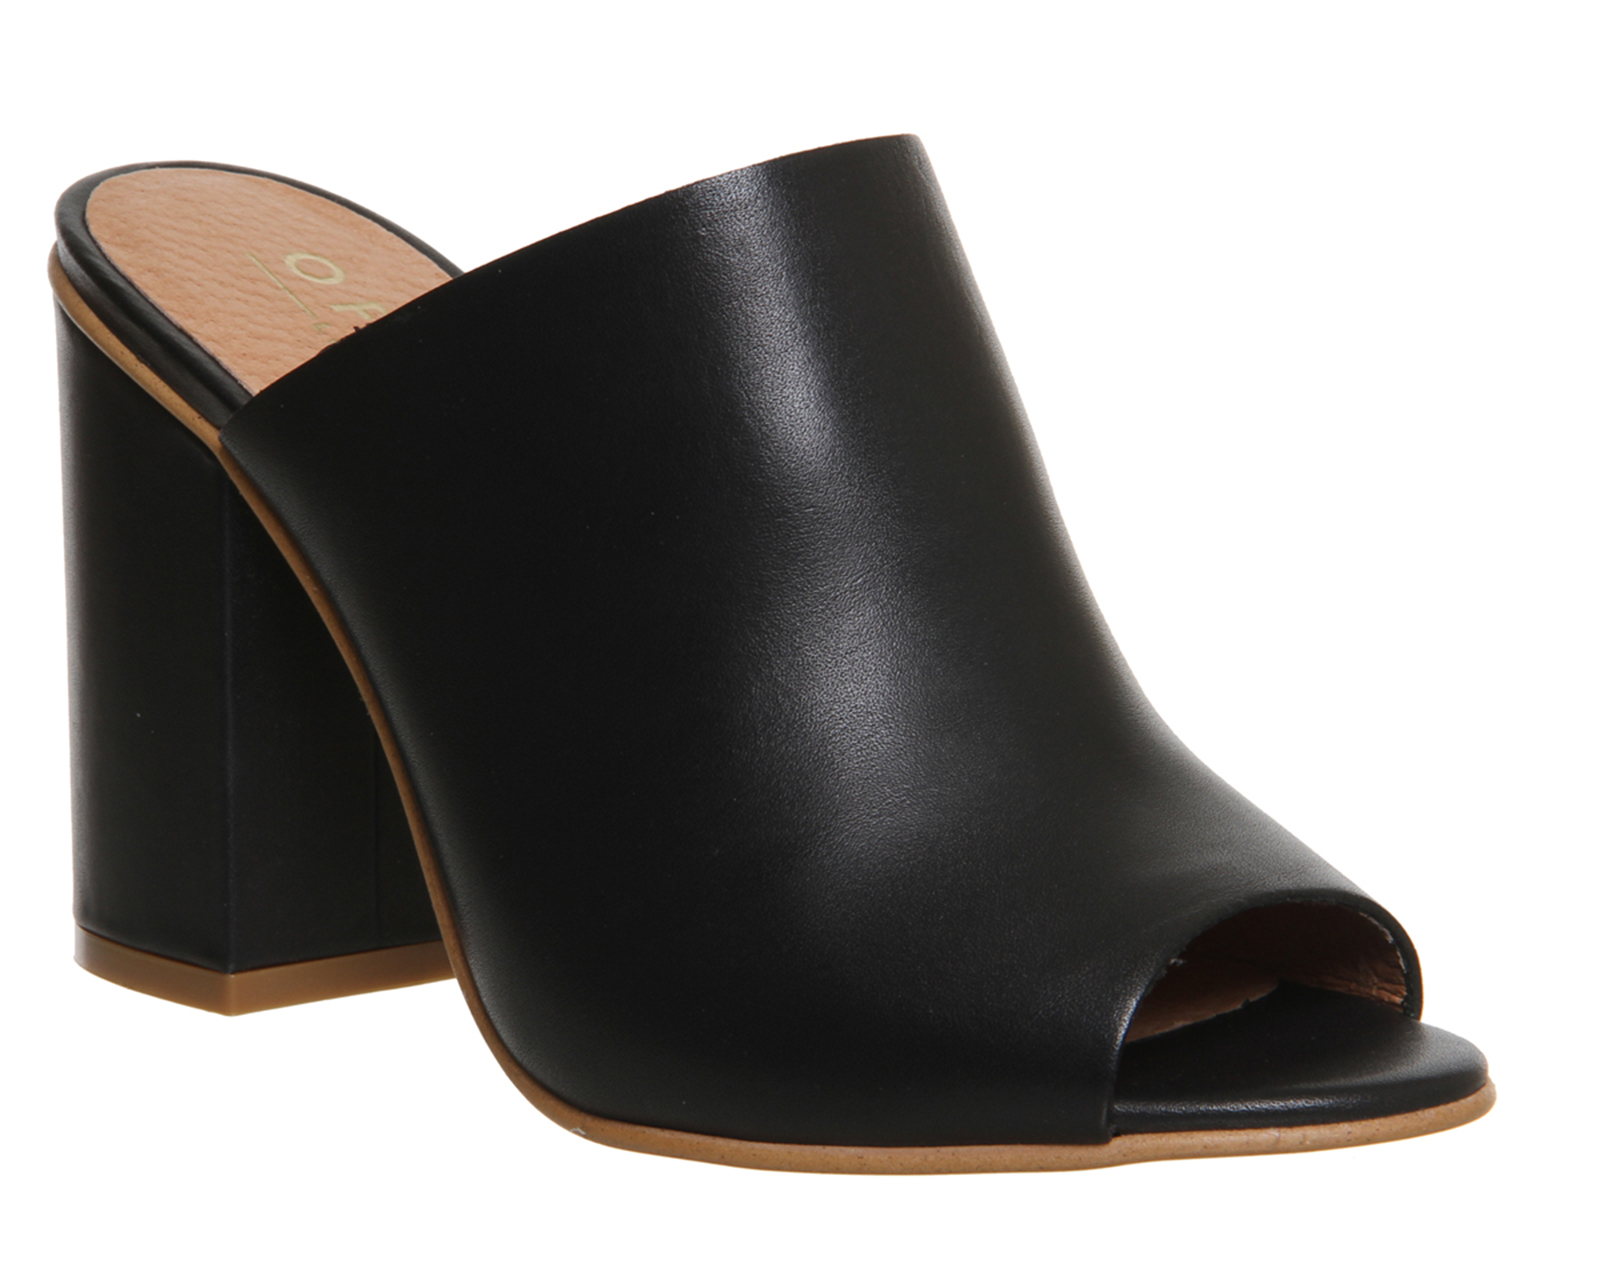 black leather high heel pumps